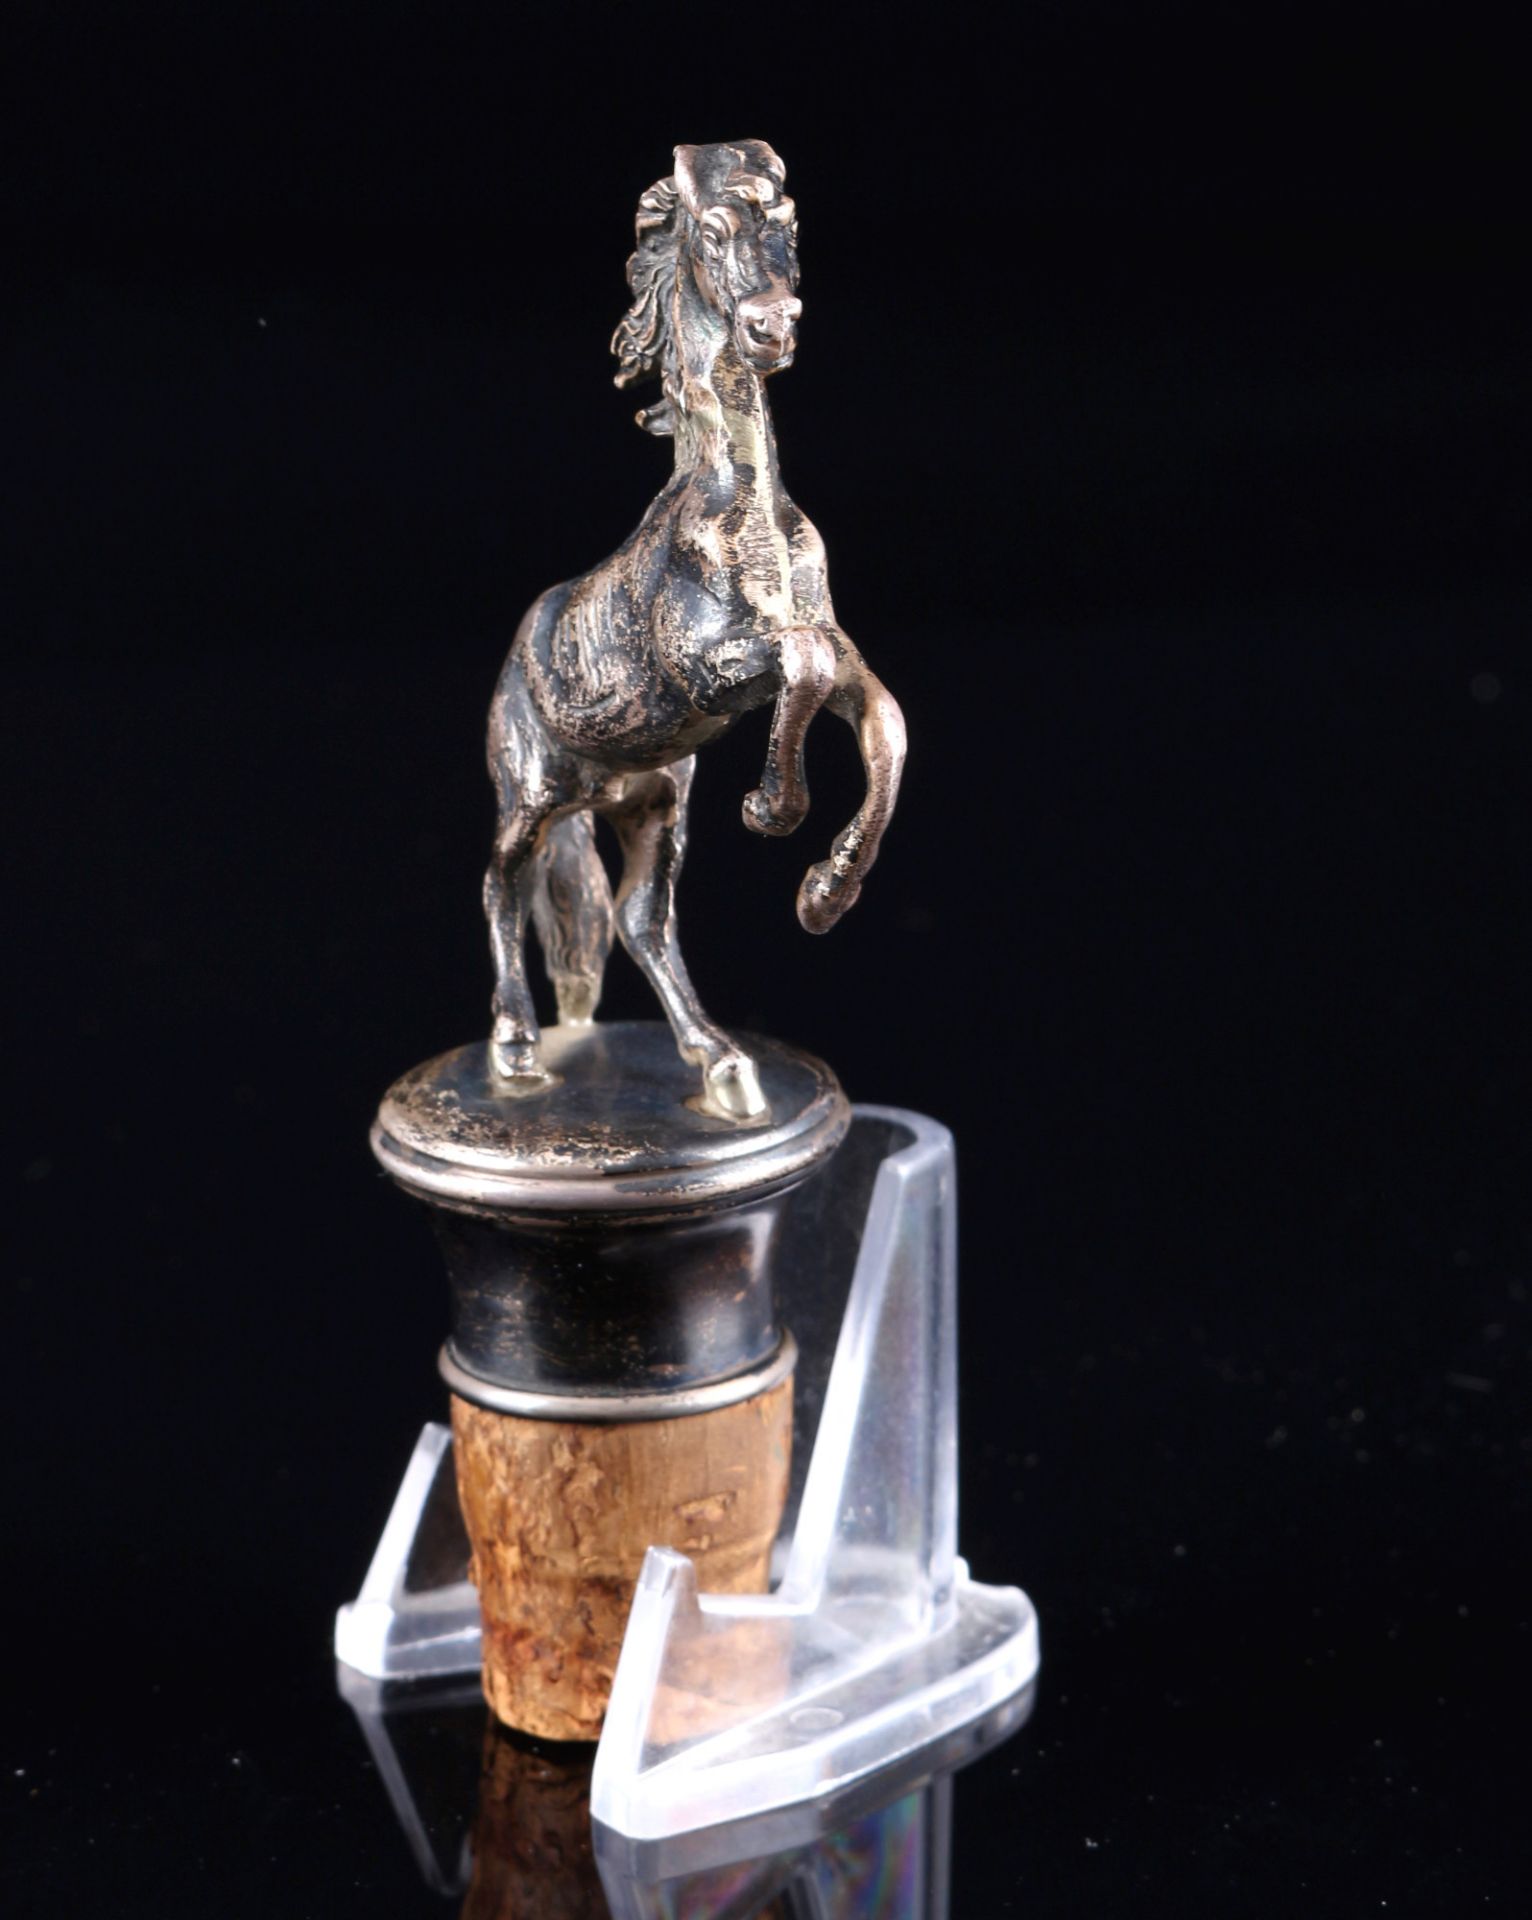 925 silver bottle cork as a horse, 925 Silber Pferd - Flaschenkorken, - Image 2 of 5